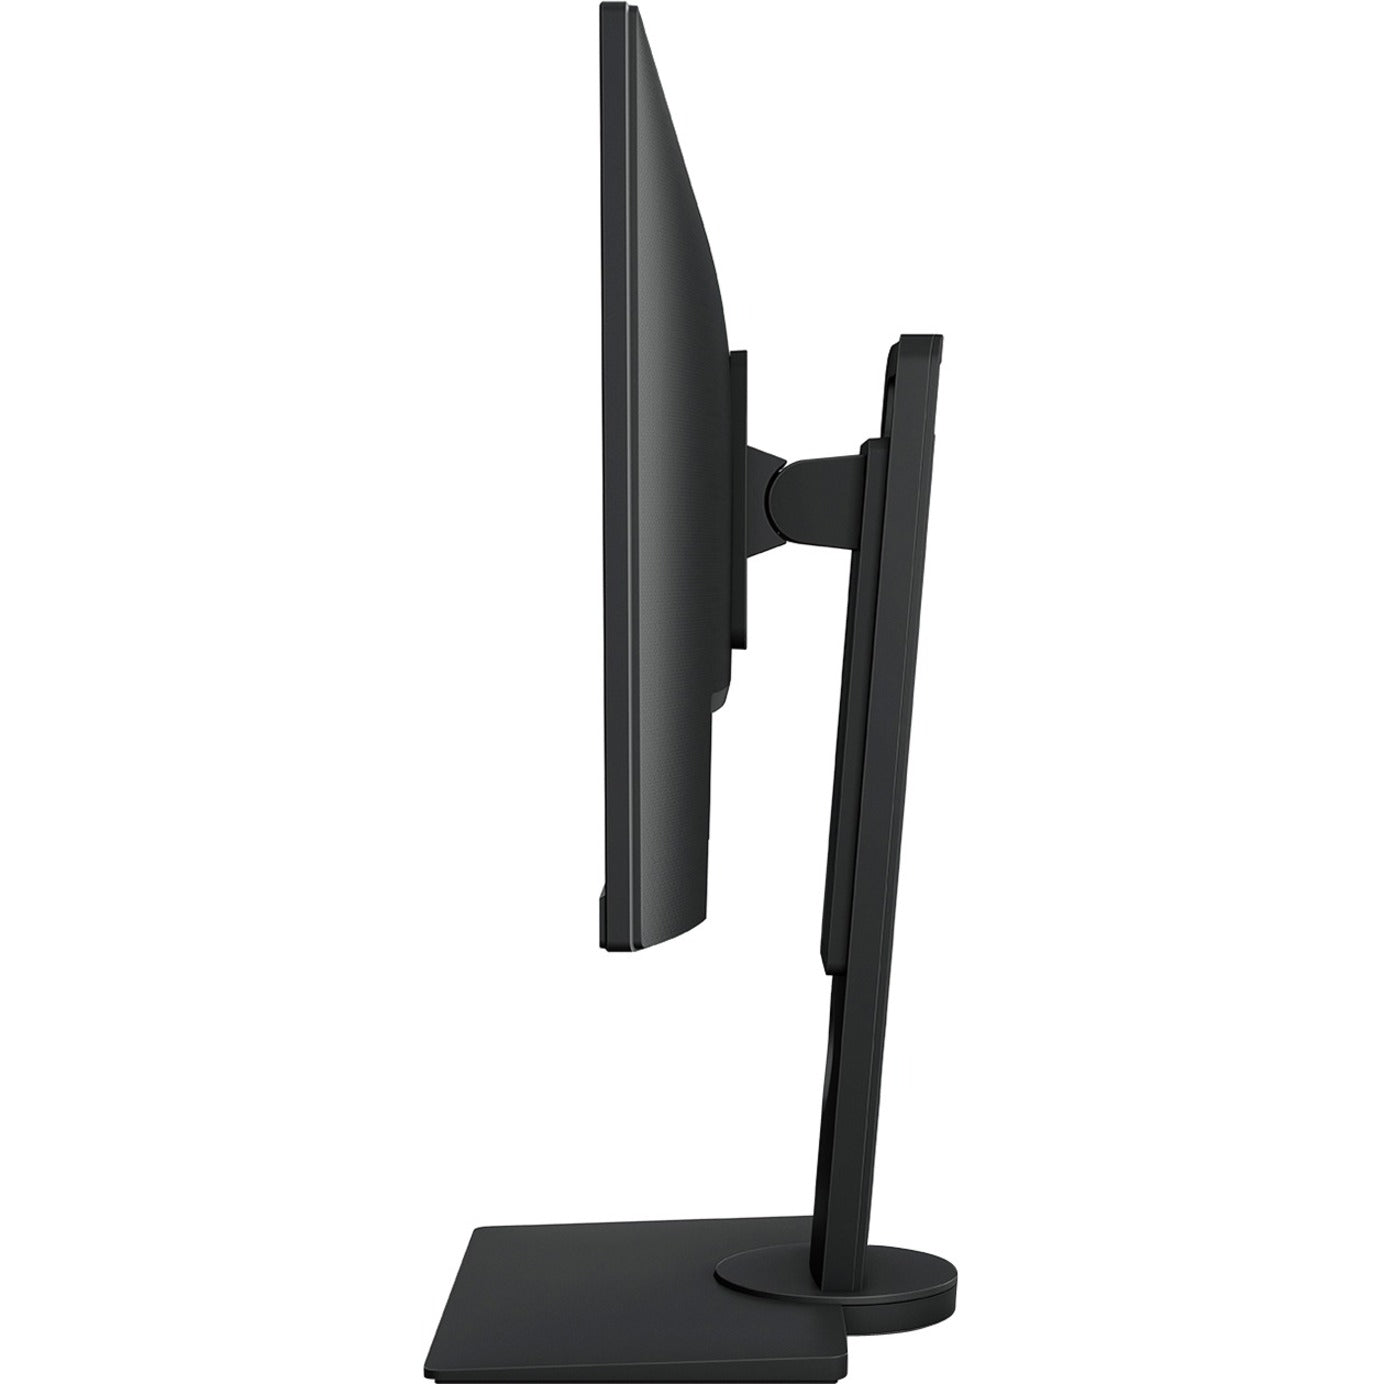 BenQ GW2480T Eye-Care Monitor for Students, Full HD LCD Monitor, 23.8", Black